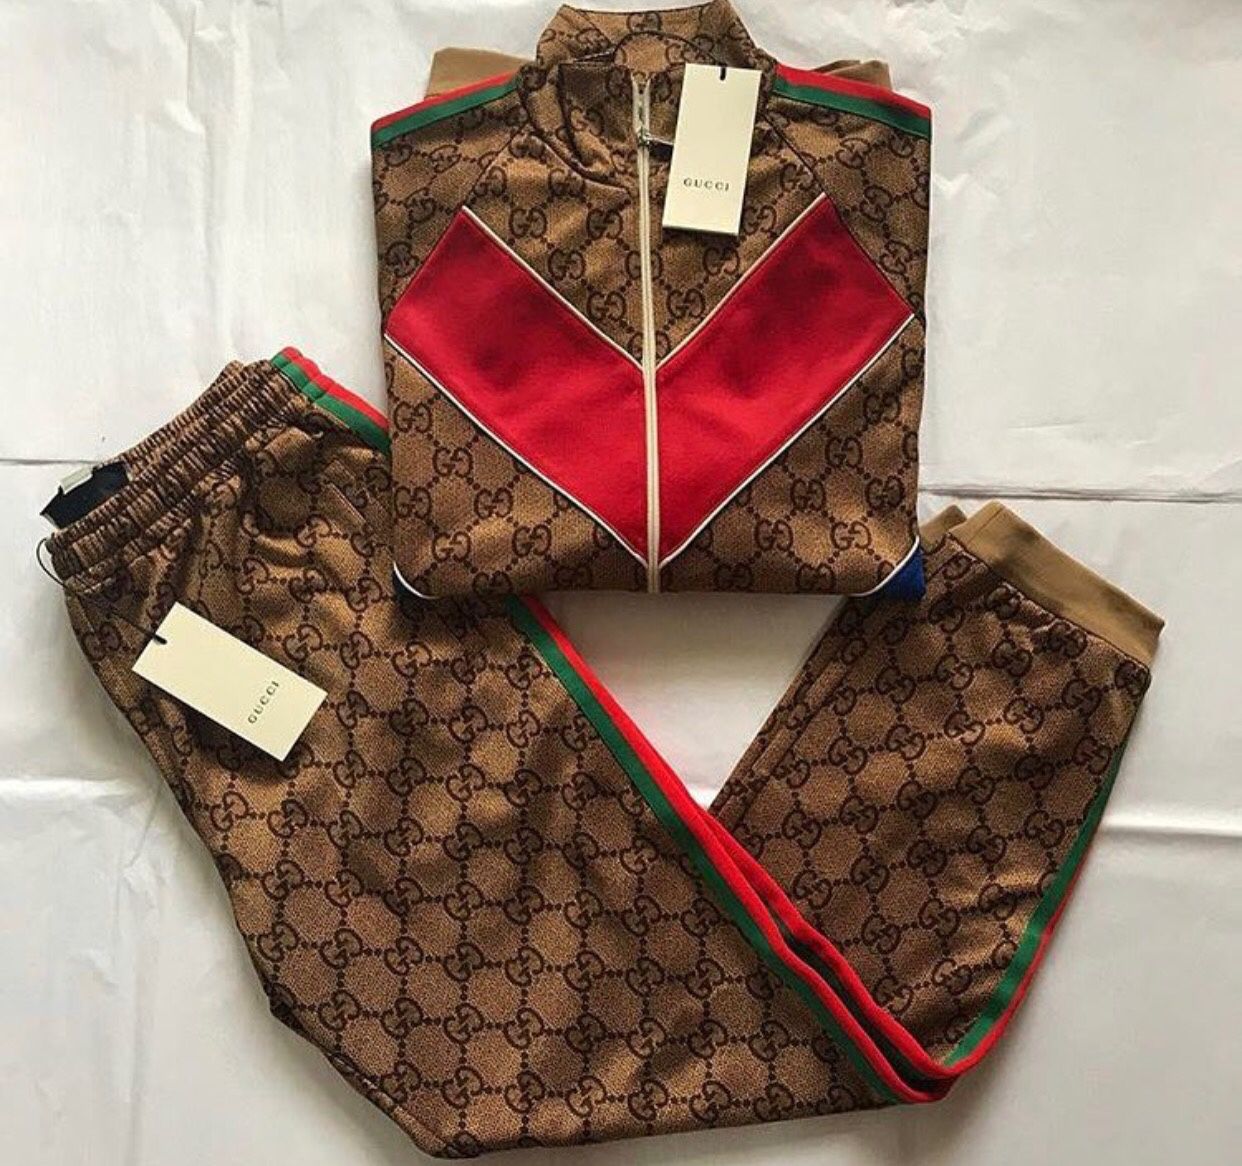 Gucci Tracksuit for Sale in Carteret, NJ - OfferUp